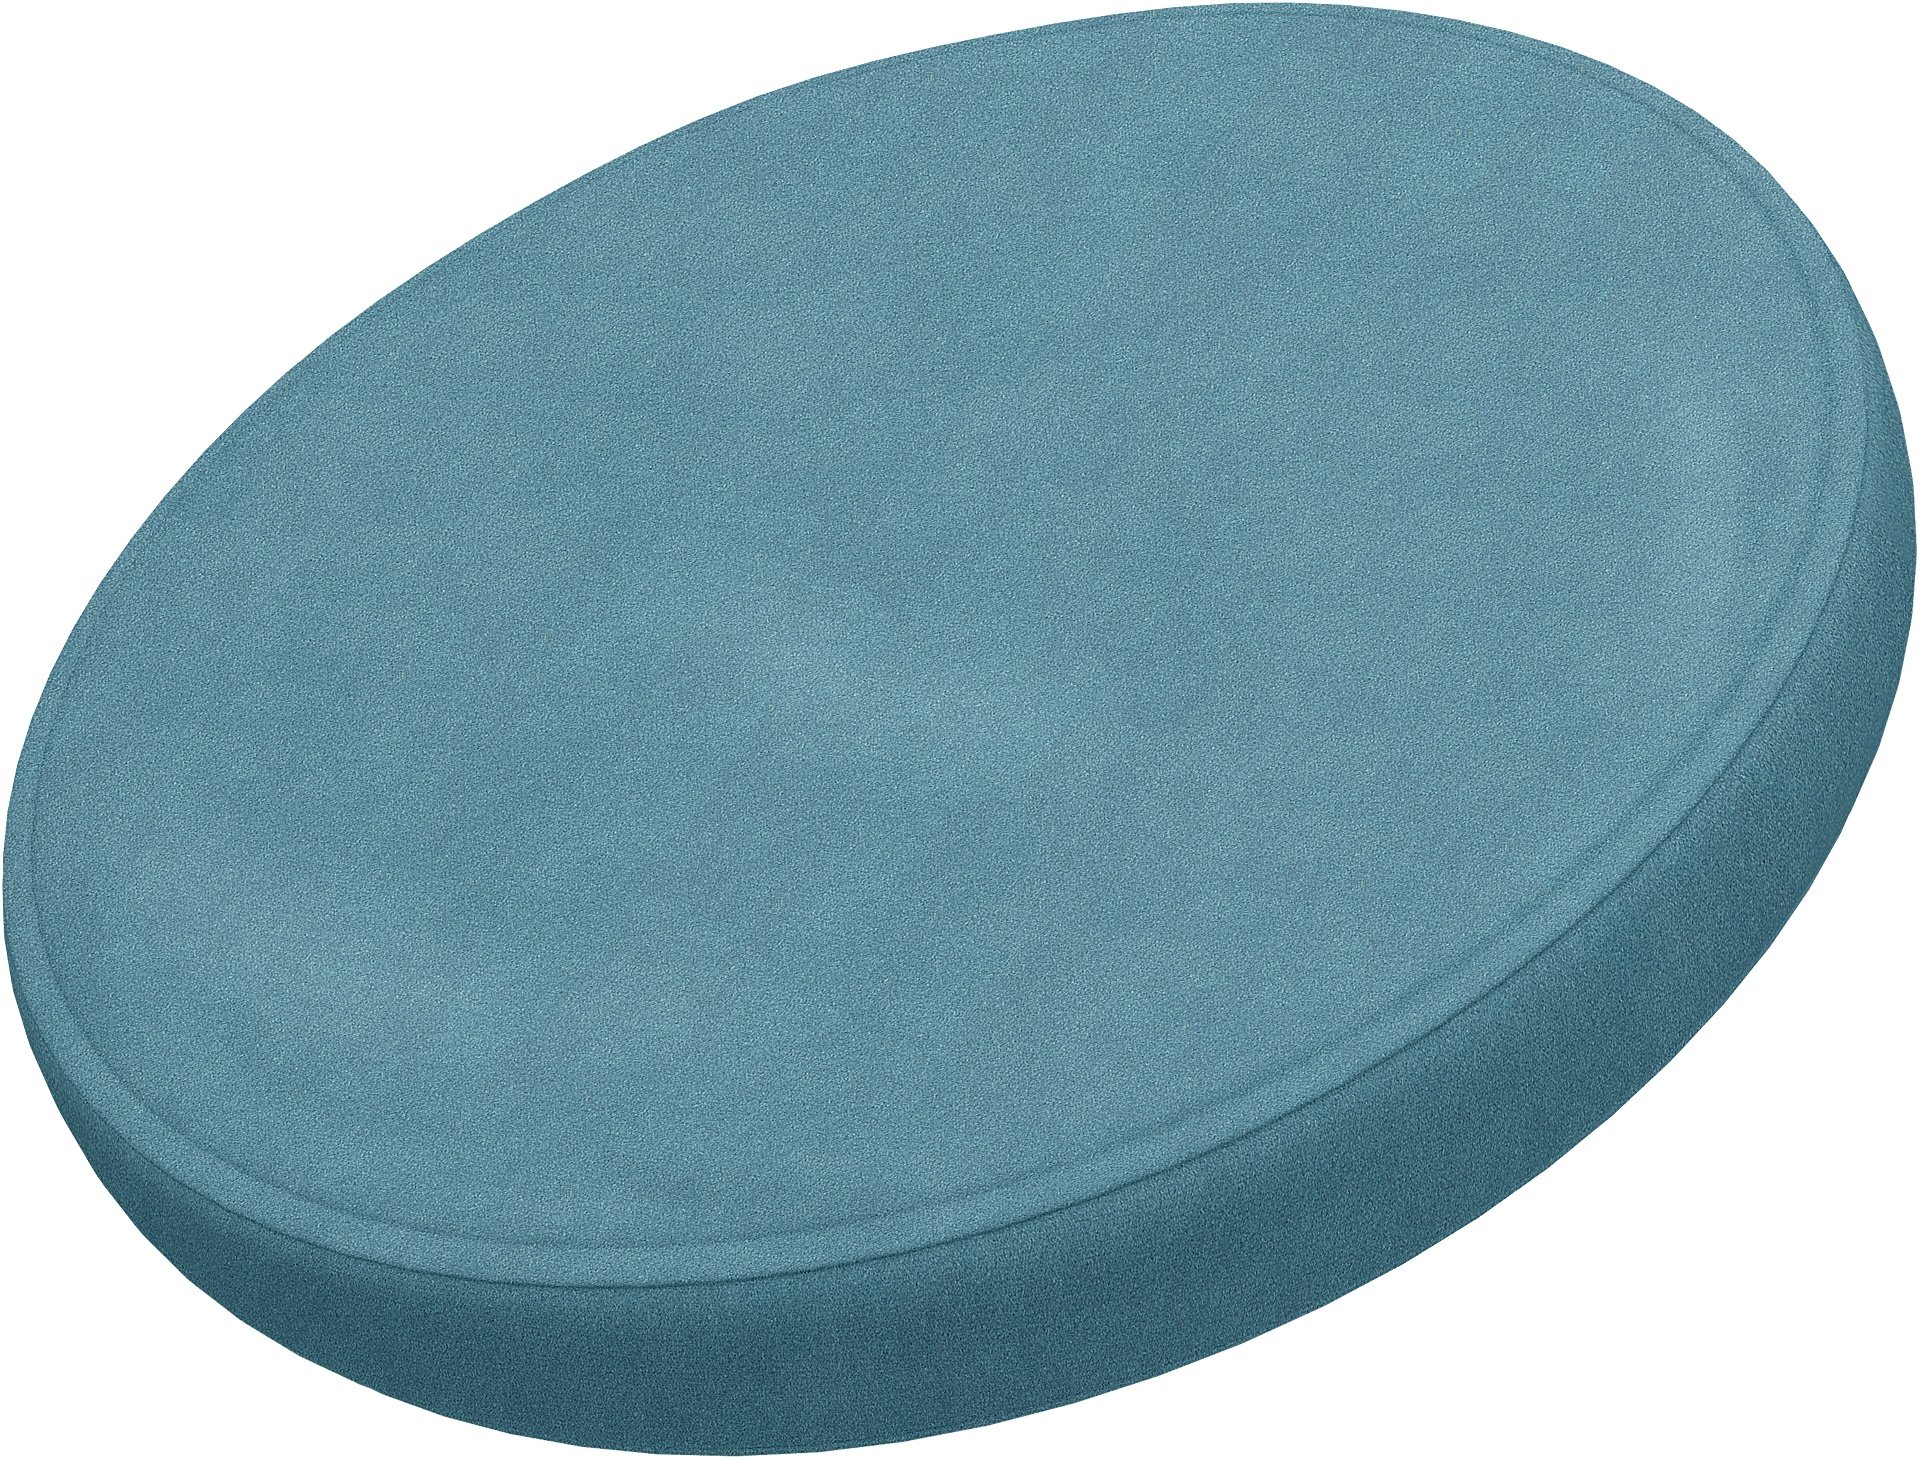 IKEA - Froson/Duvholmen Chair Seat Cushion Round Cover , Dusk Blue, Outdoor - Bemz